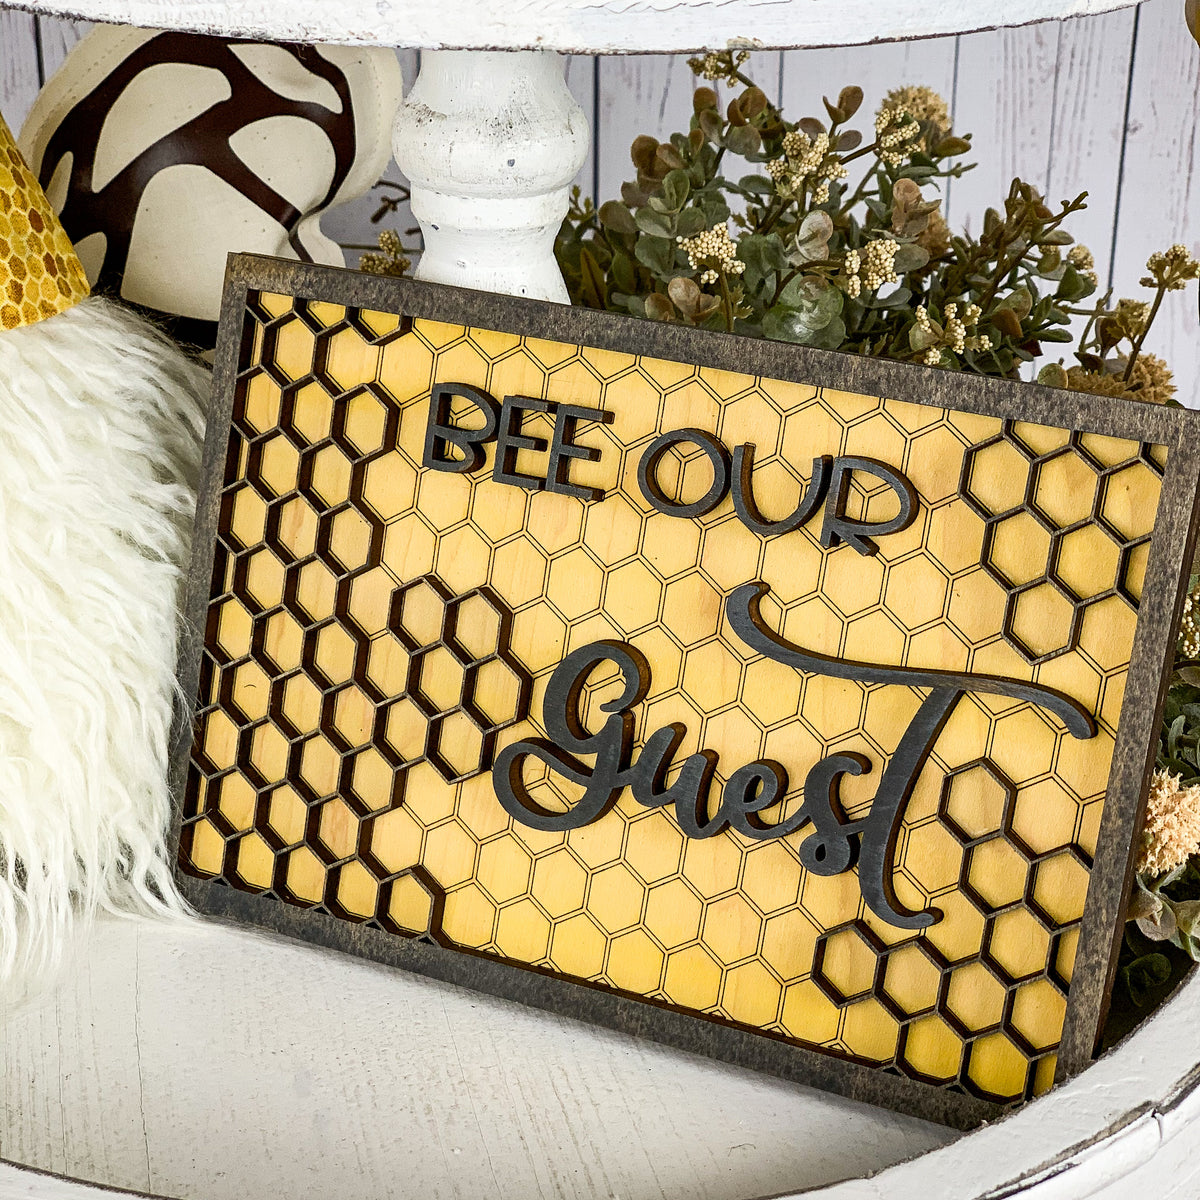 Hexagon Bee 3D sign - Honey Bee Tiered Tray Decor – Backyard Dahlia